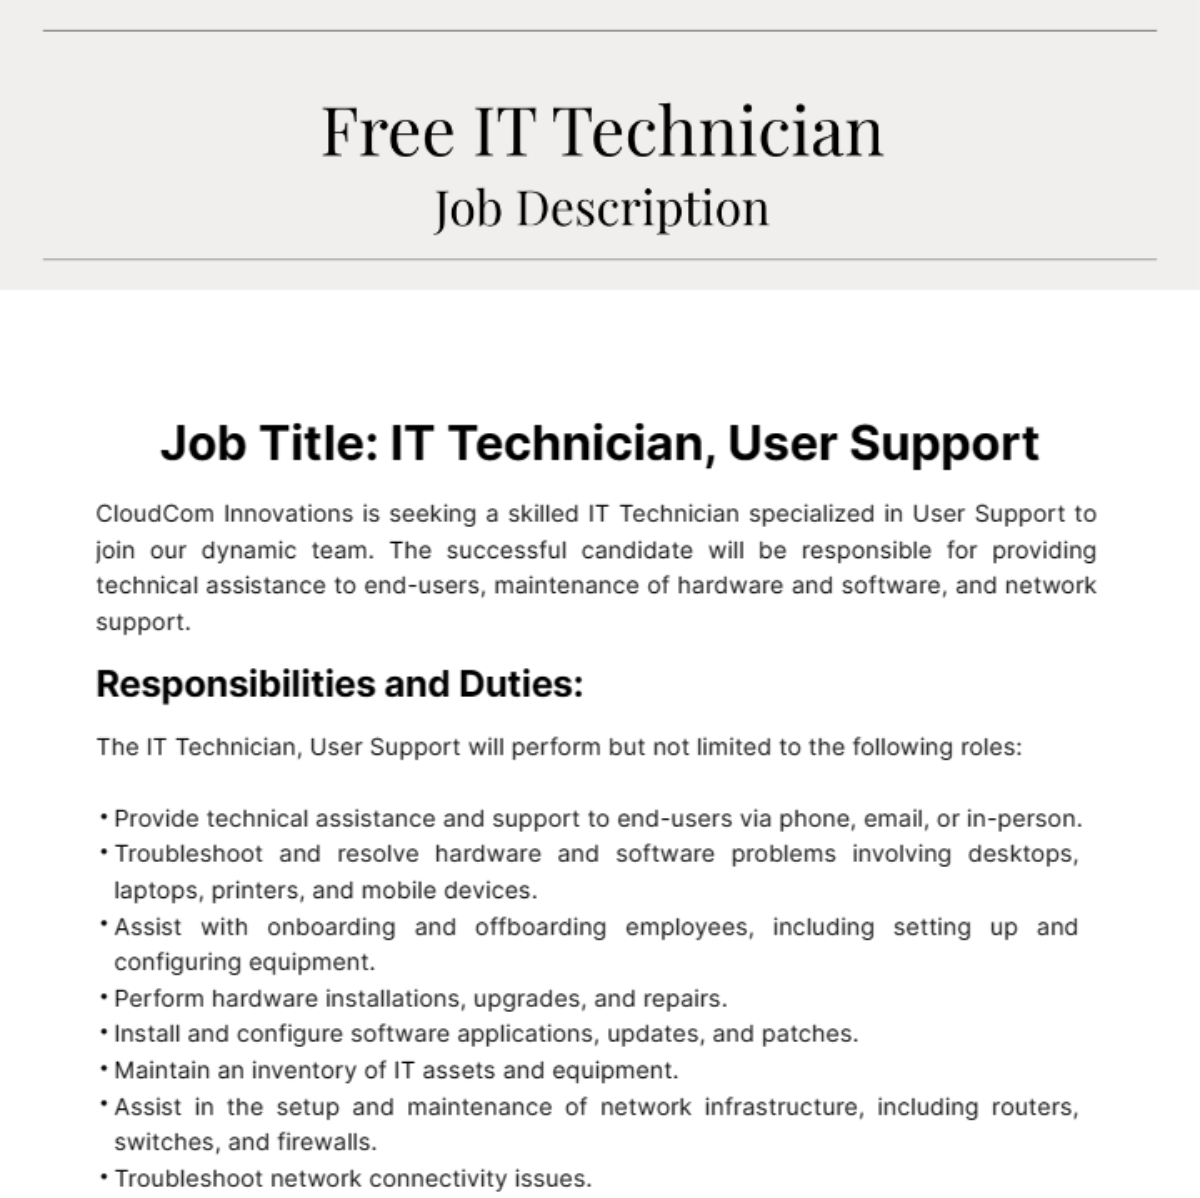 Free IT Technician Job Description Template